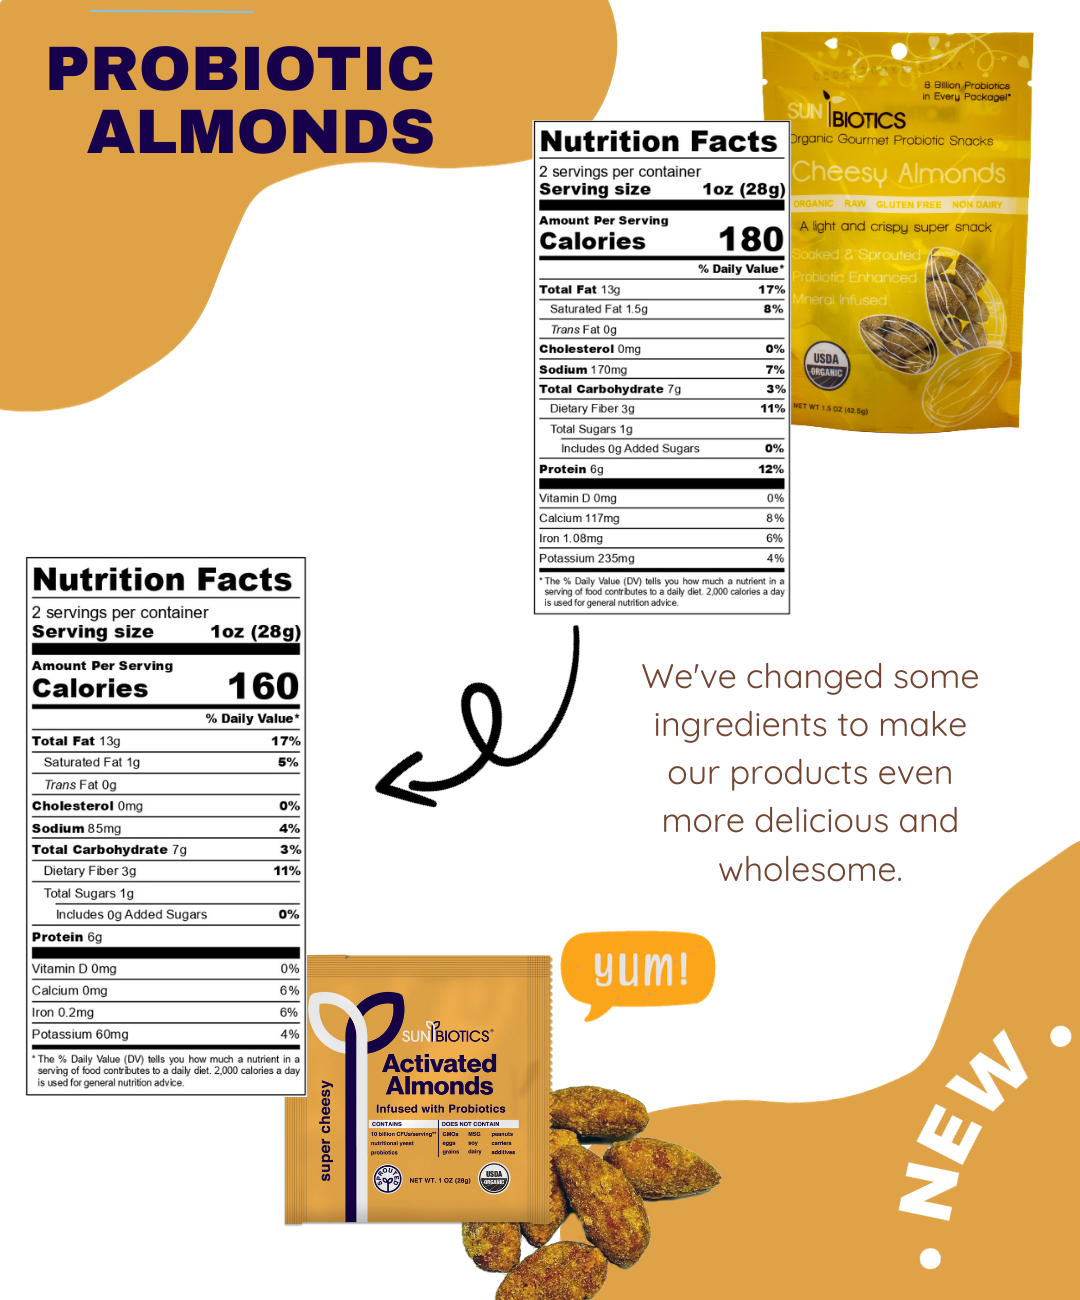 Activated Almonds: Probiotic Almonds - Super Cheesy